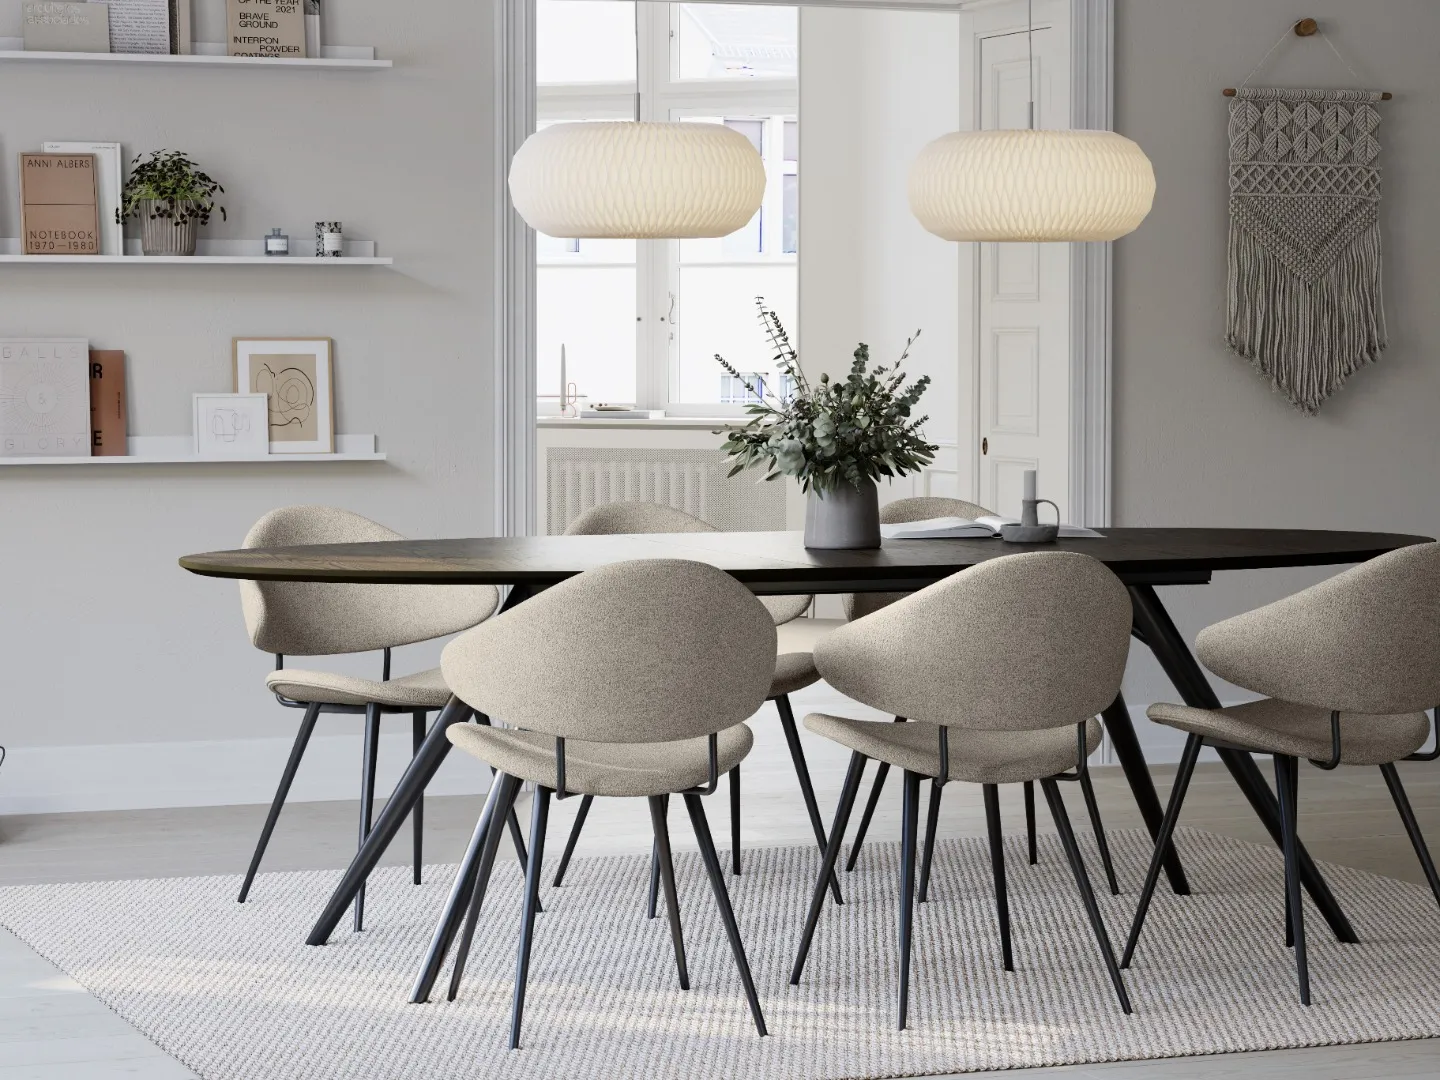 DAN-FORM's NAPOLEON chairs in pebble earth bouclé fabric around the ECLIPSE table in a Copenhagen apartment